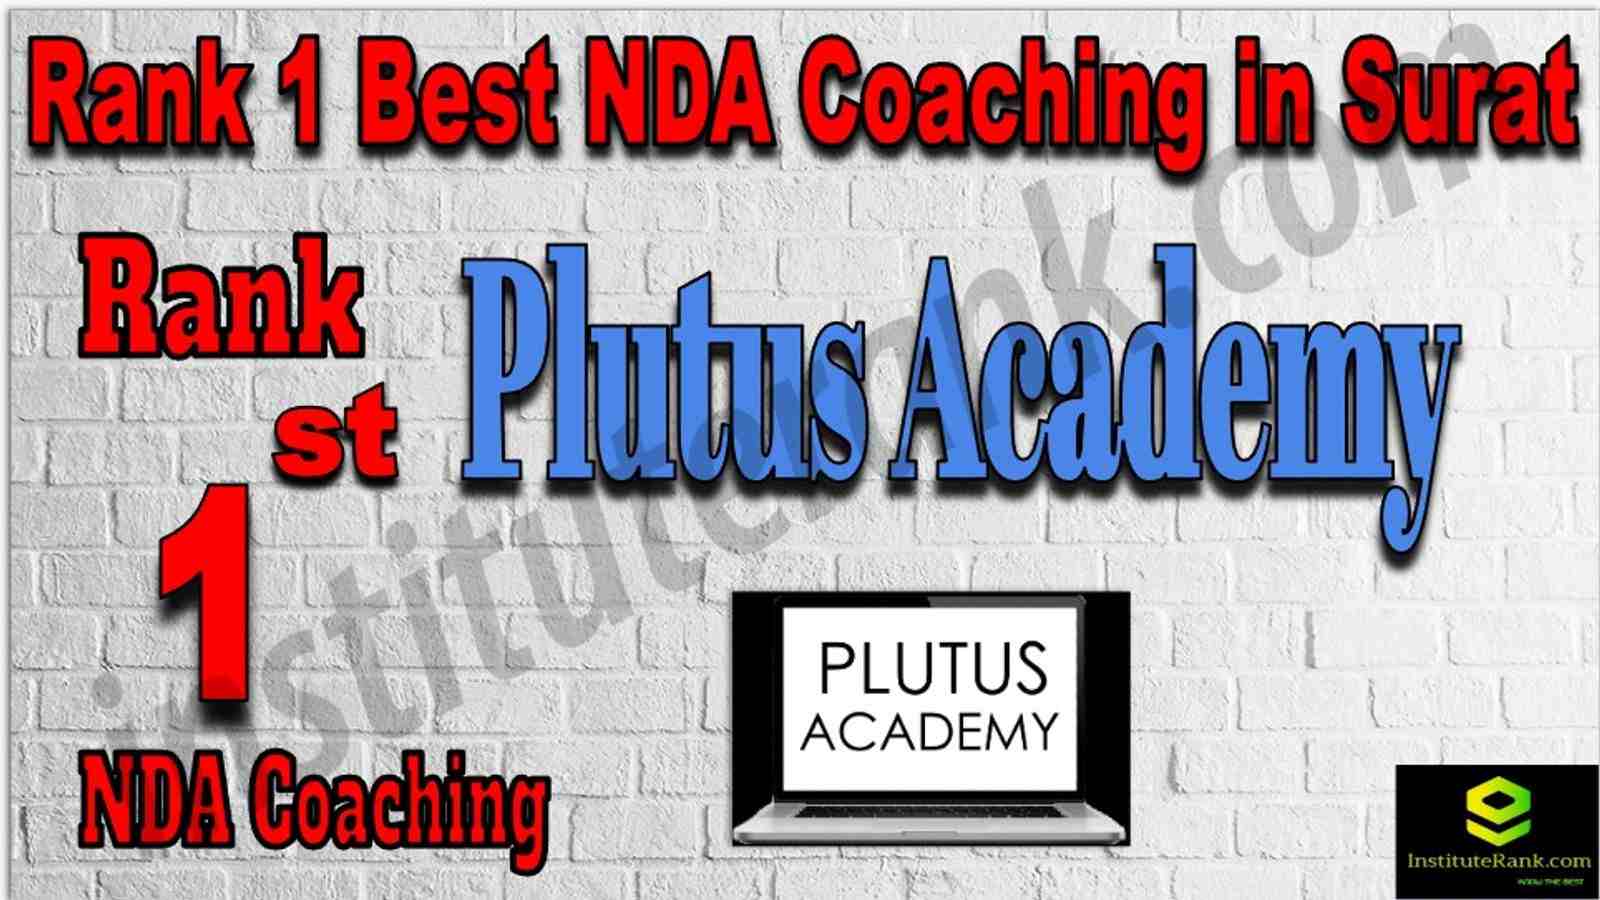  Rank 1 Best NDA Coaching in Surat